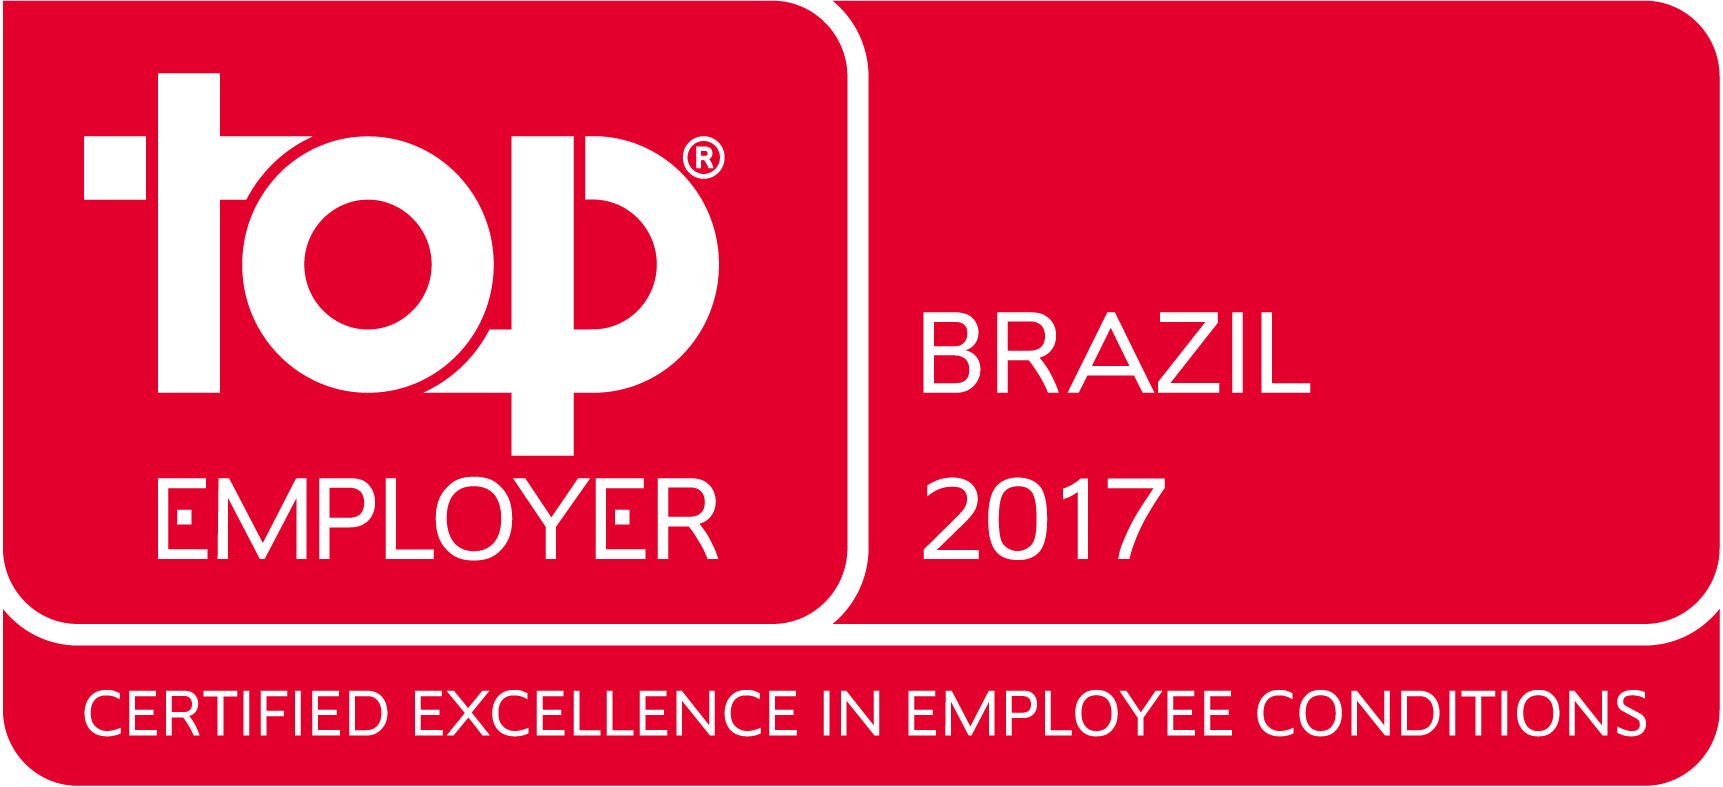 2017 Top Employer Brazil logo